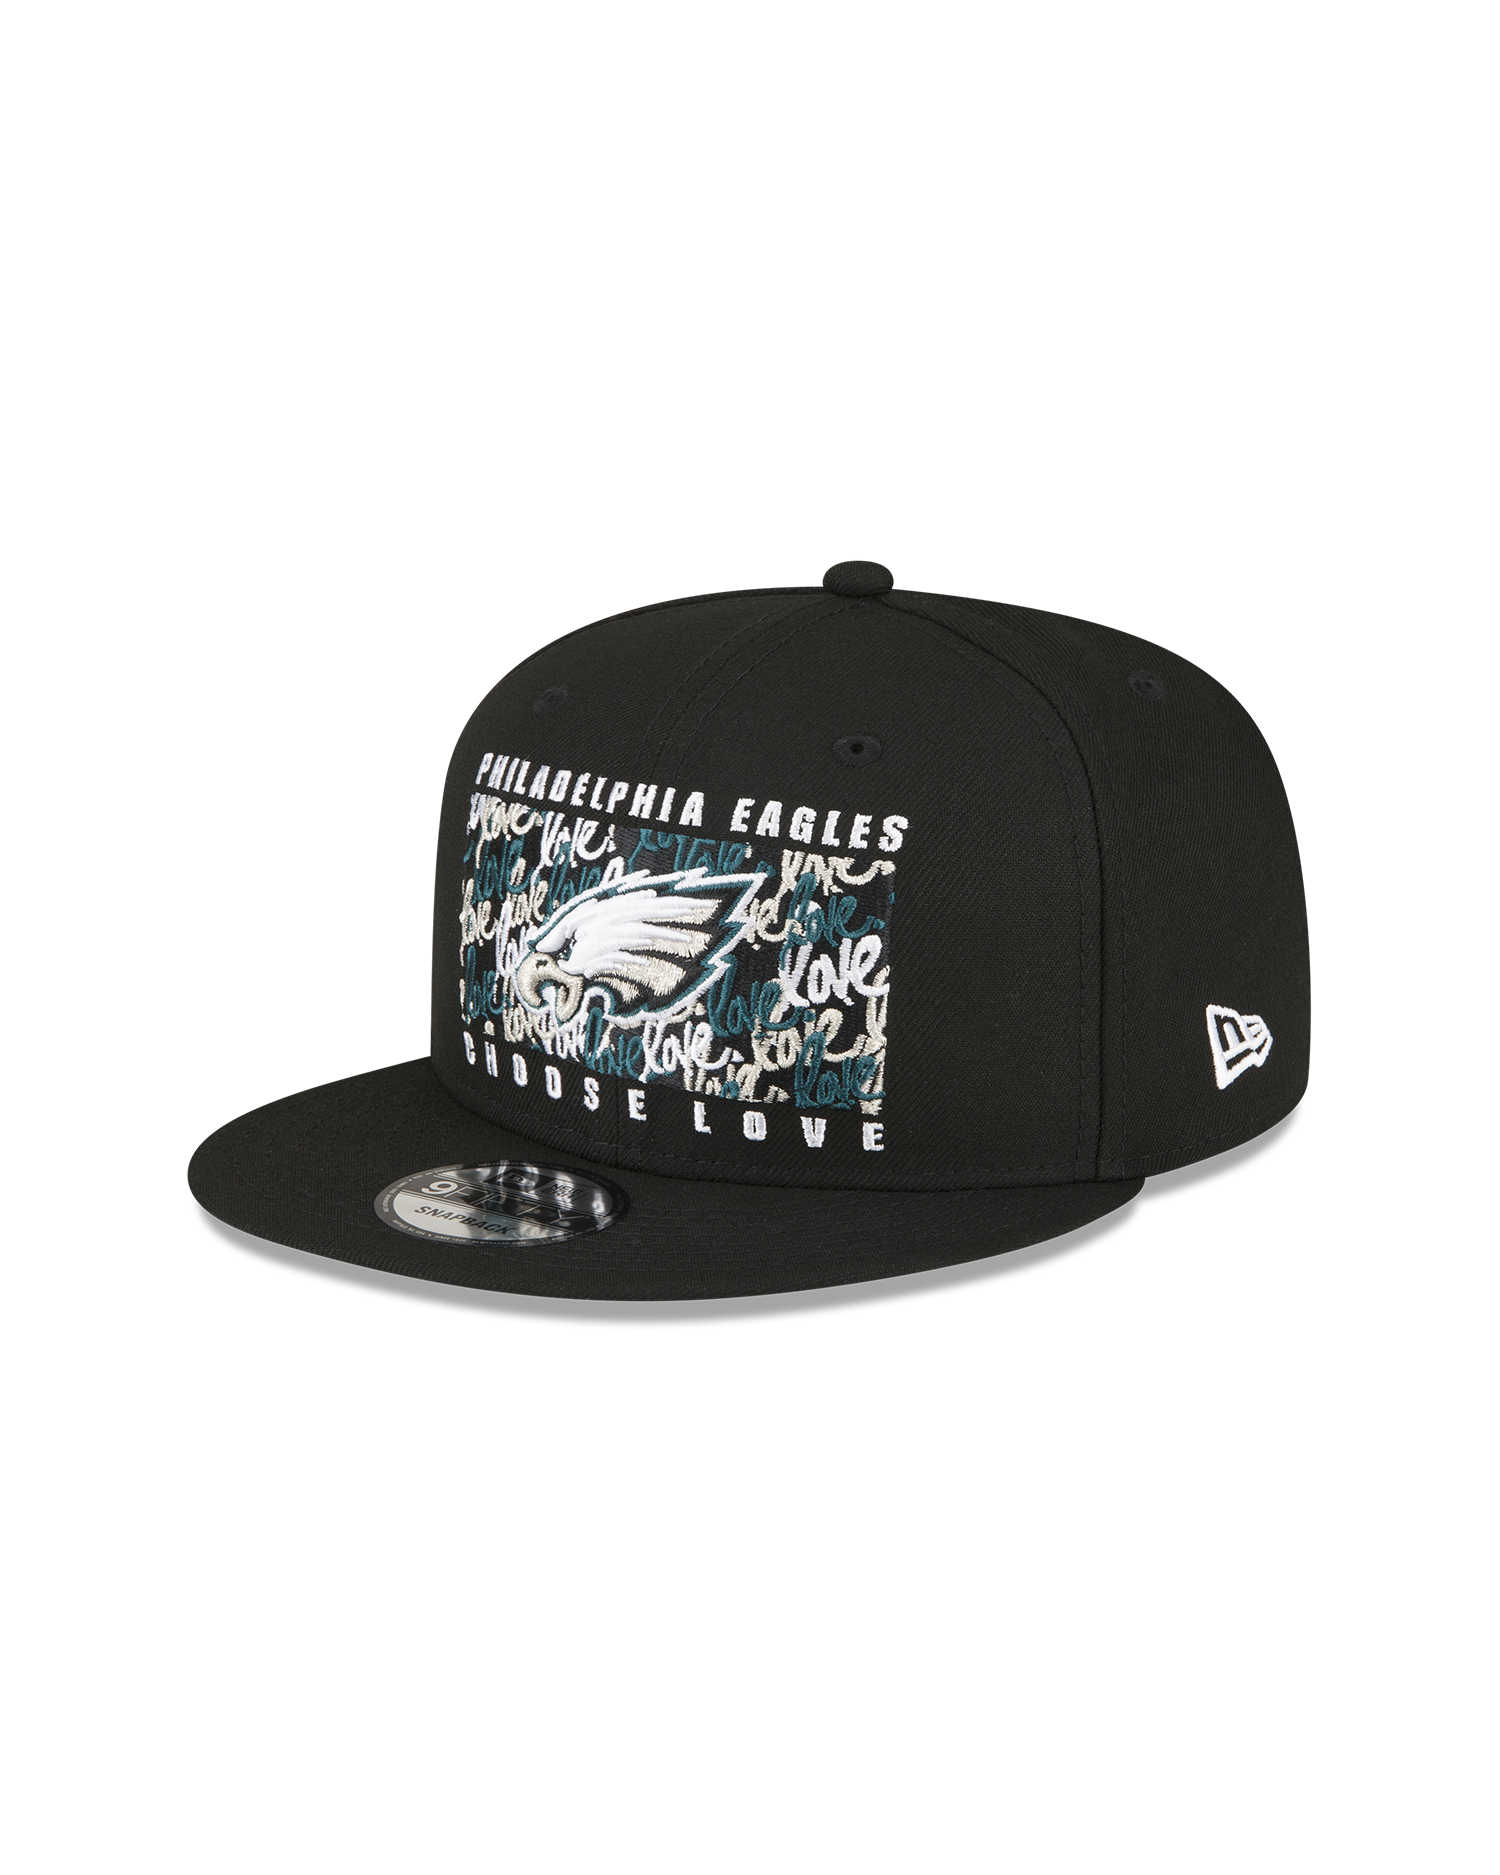 Ruben Rojas x Philadelphia Eagles Black 9FIFTY Snapbacks